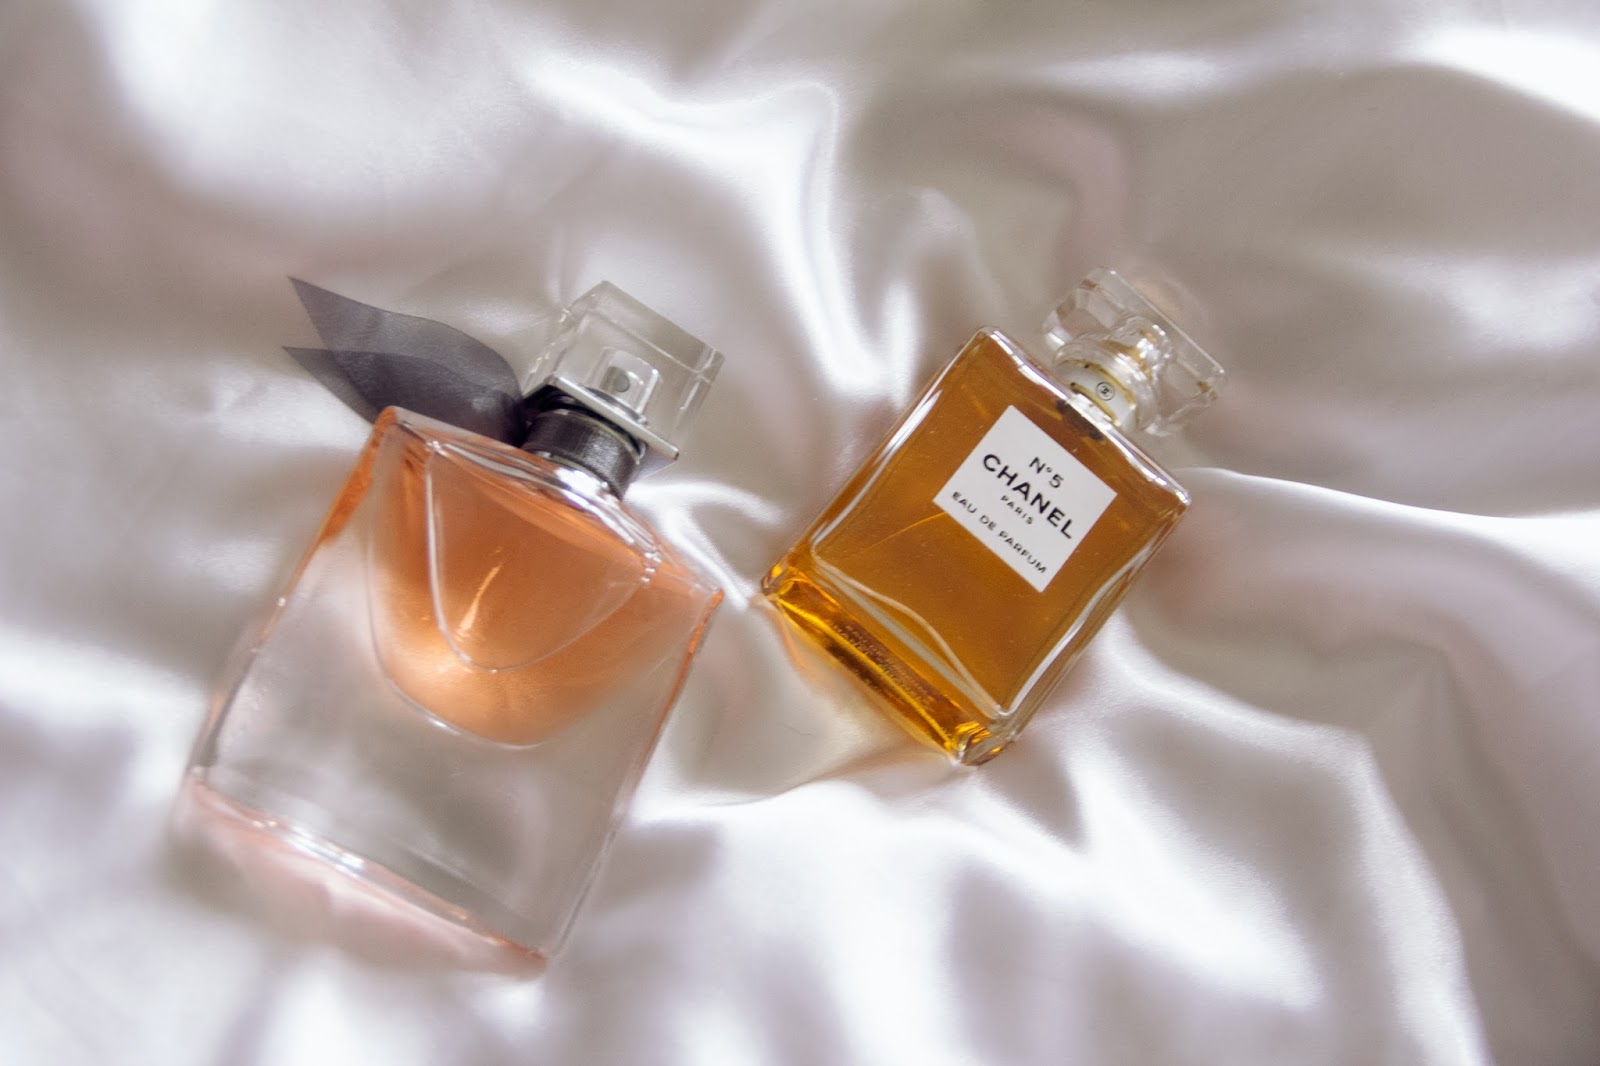 Top 10 parfums online bestellen | Parfumerie.nl